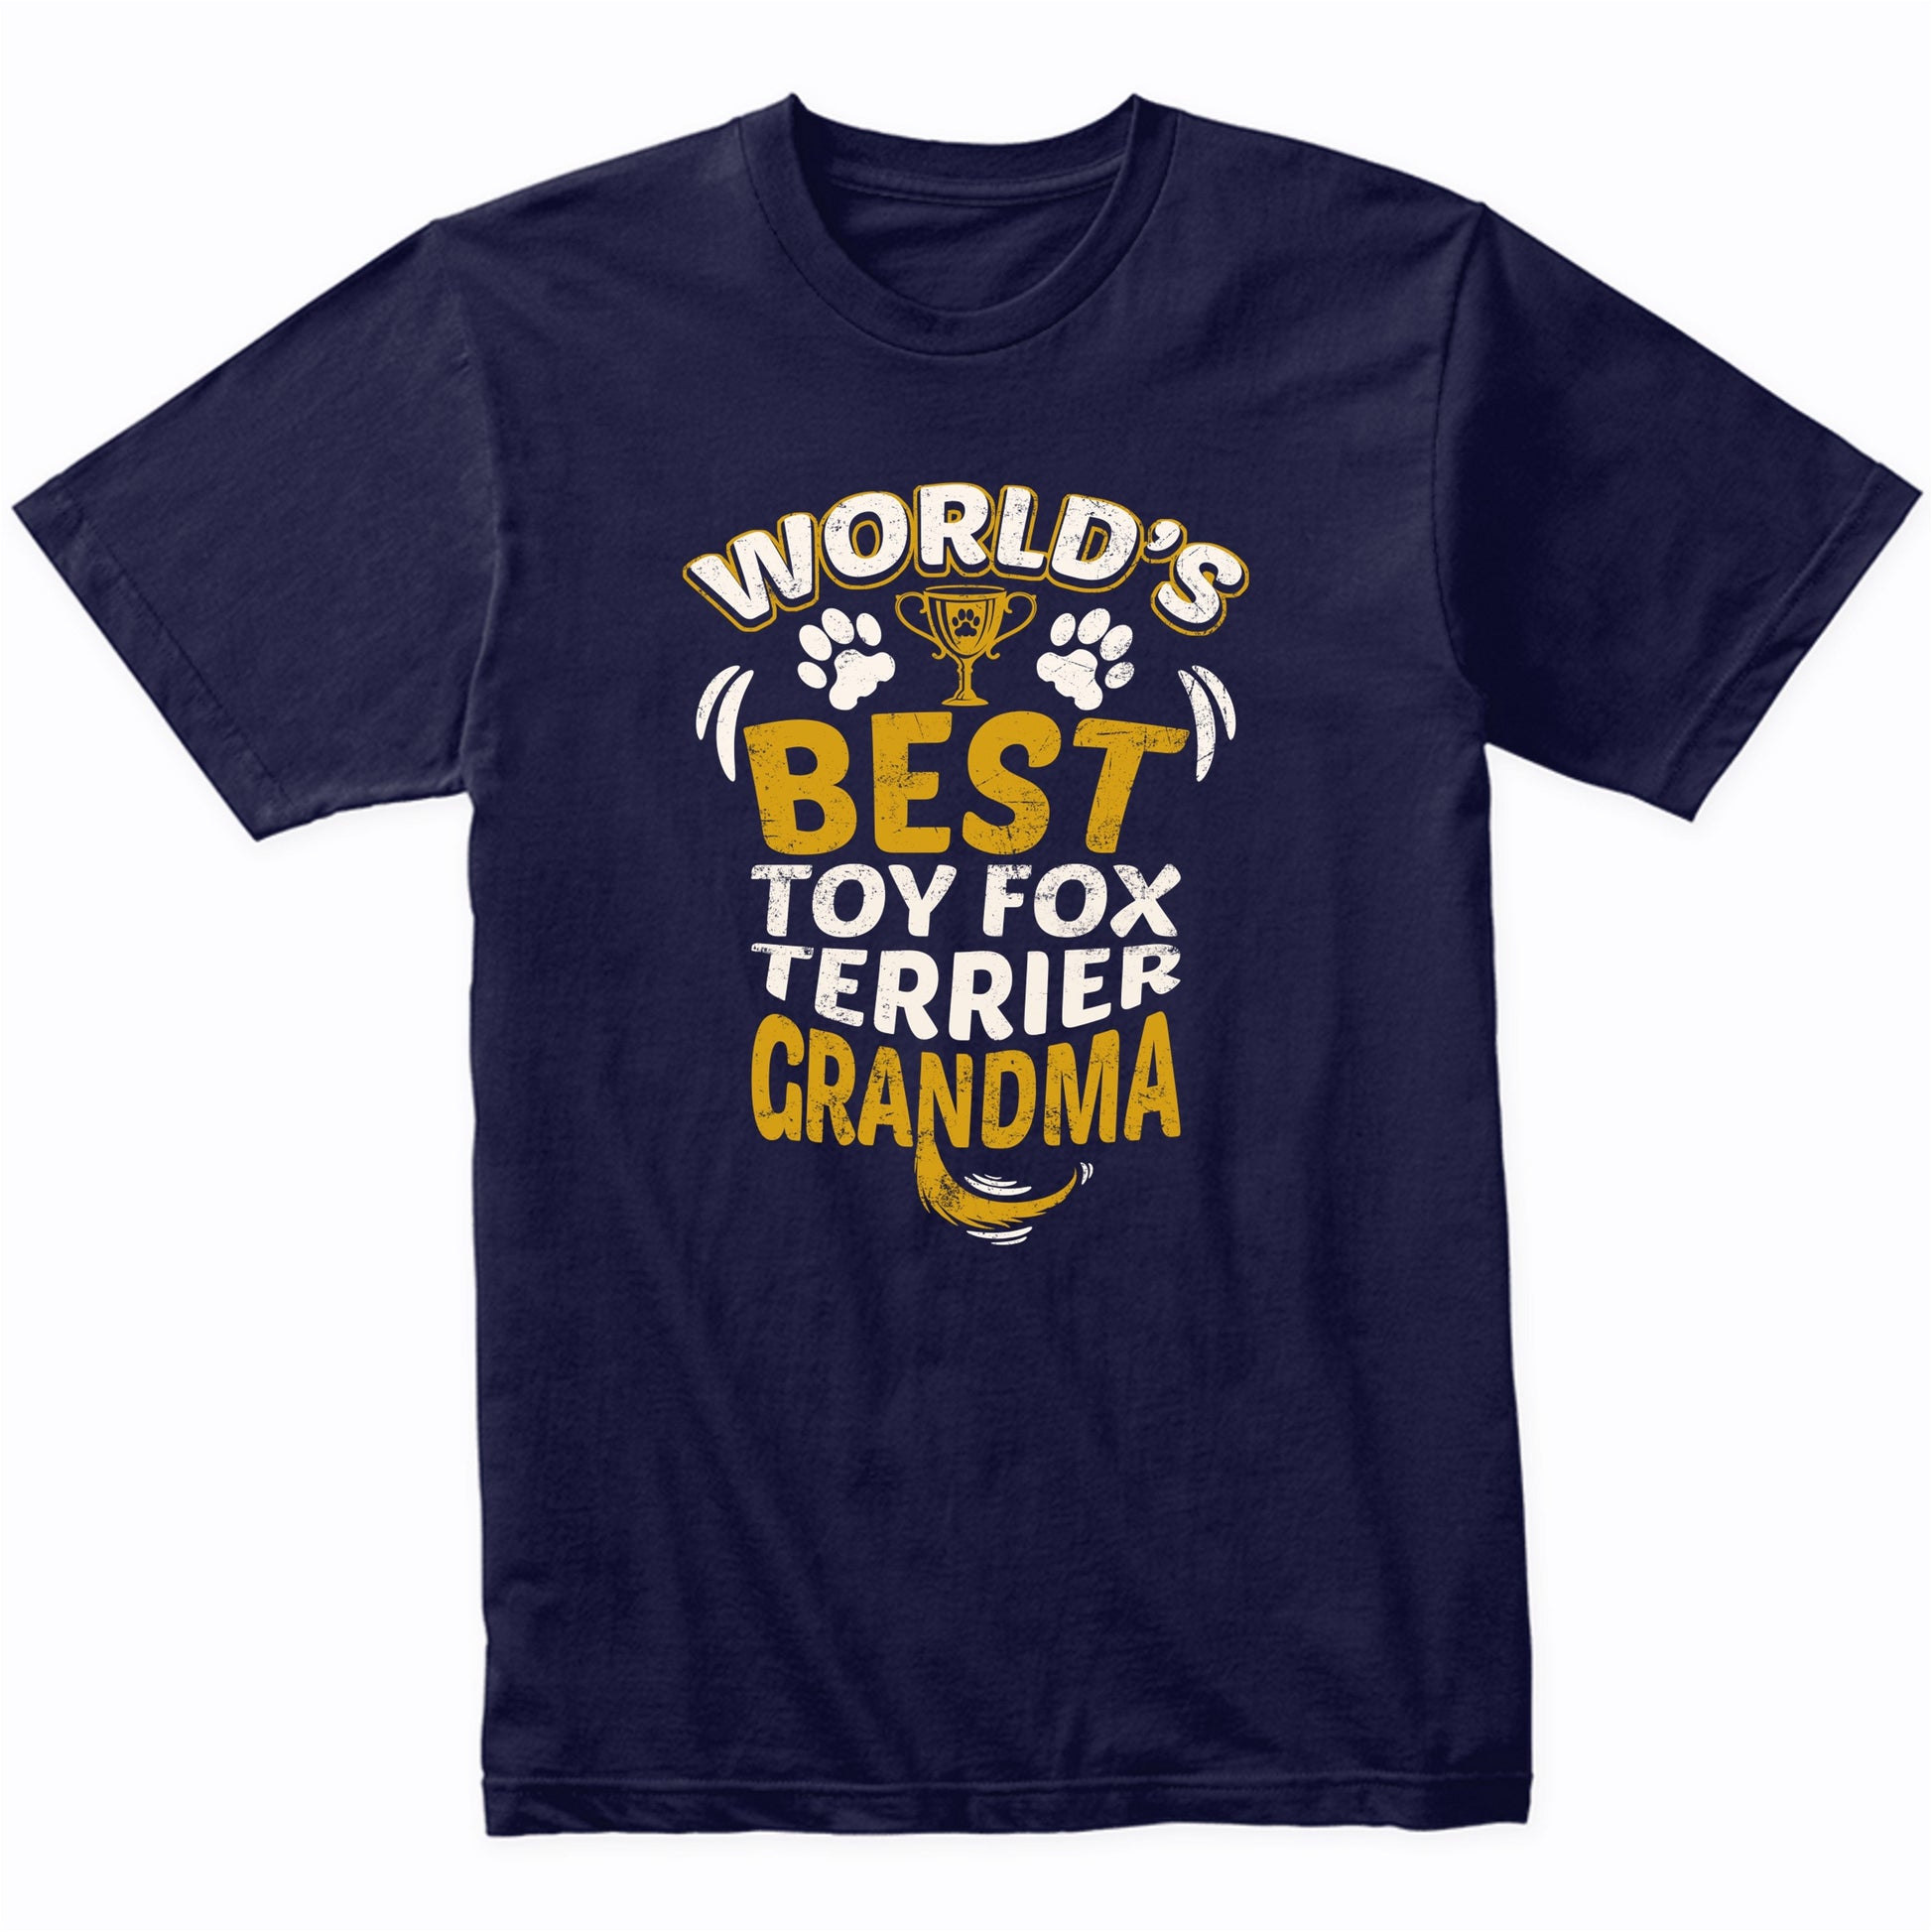 World's Best Toy Fox Terrier Grandma Graphic T-Shirt